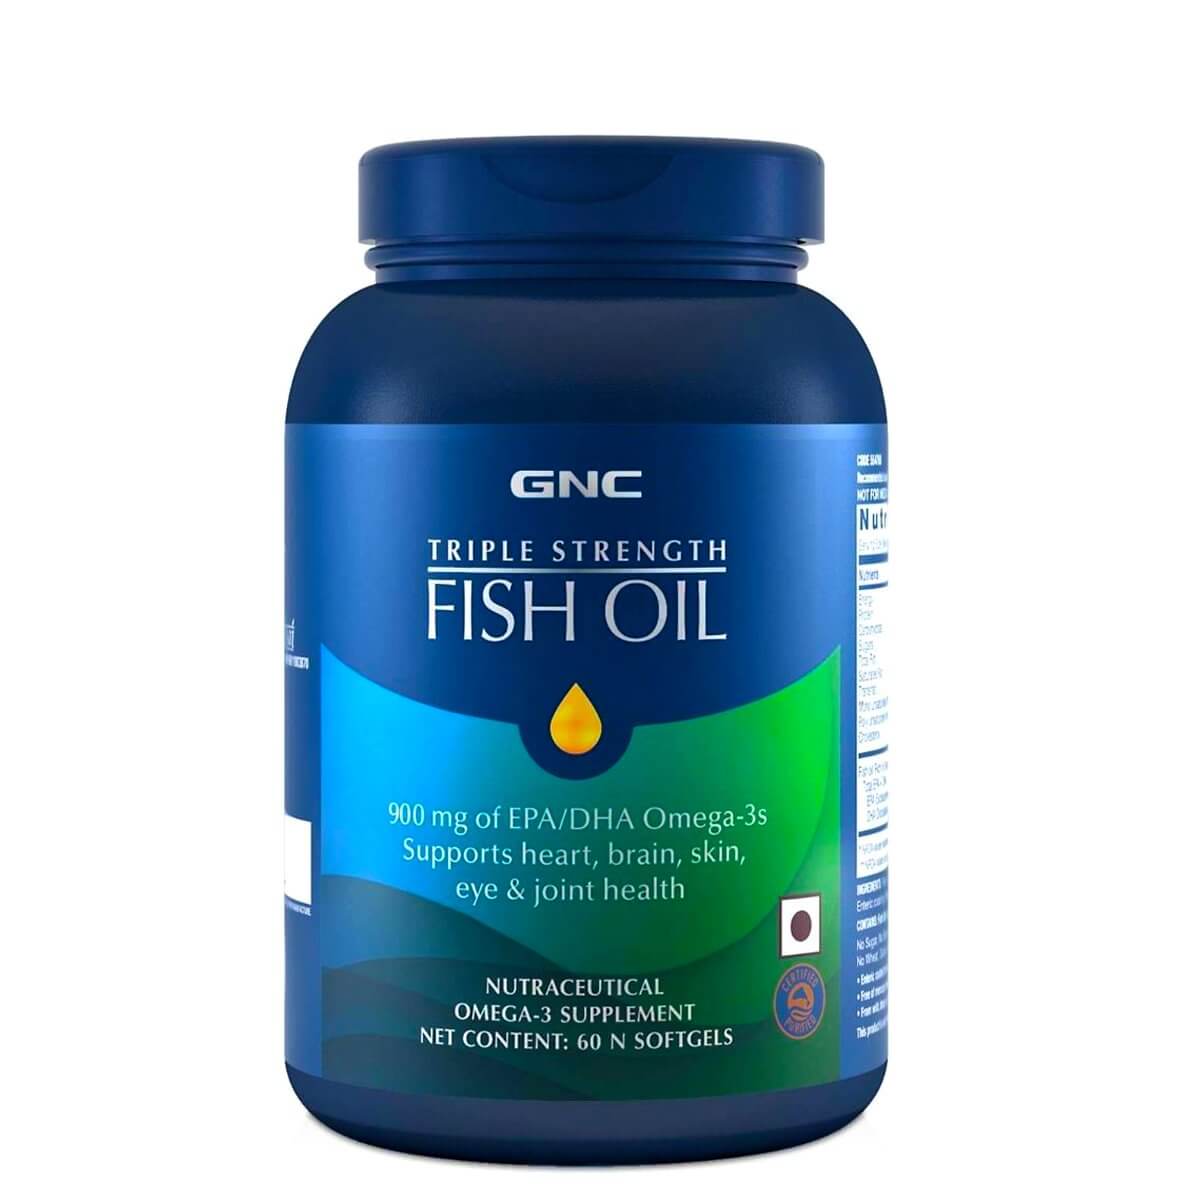 Gnc Trippple strengh fish oil